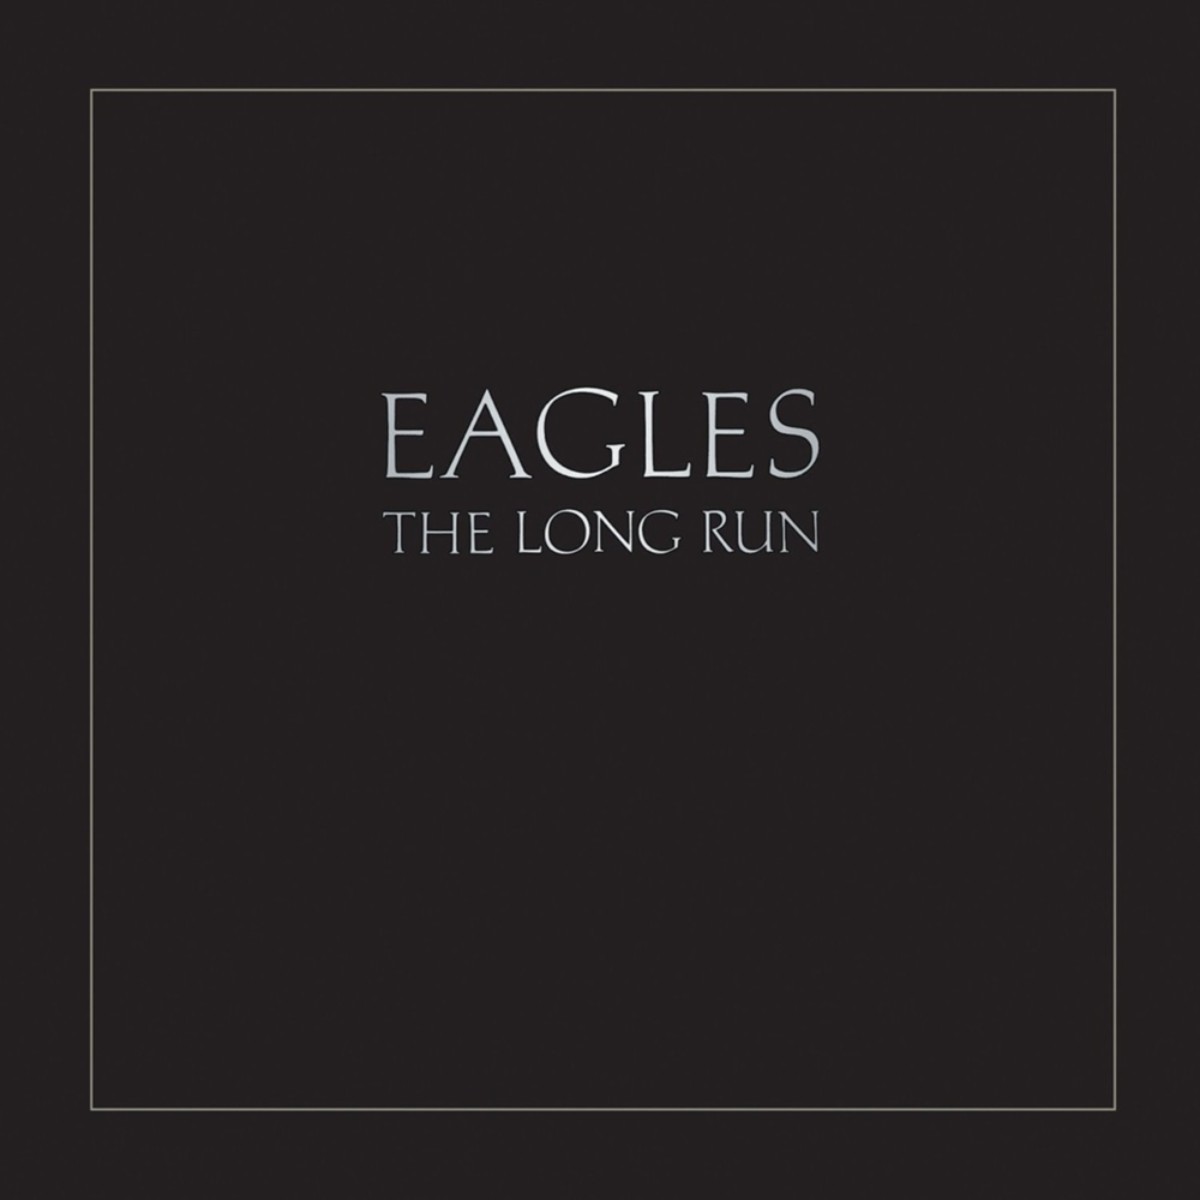 The Eagles, album "The Long Run".